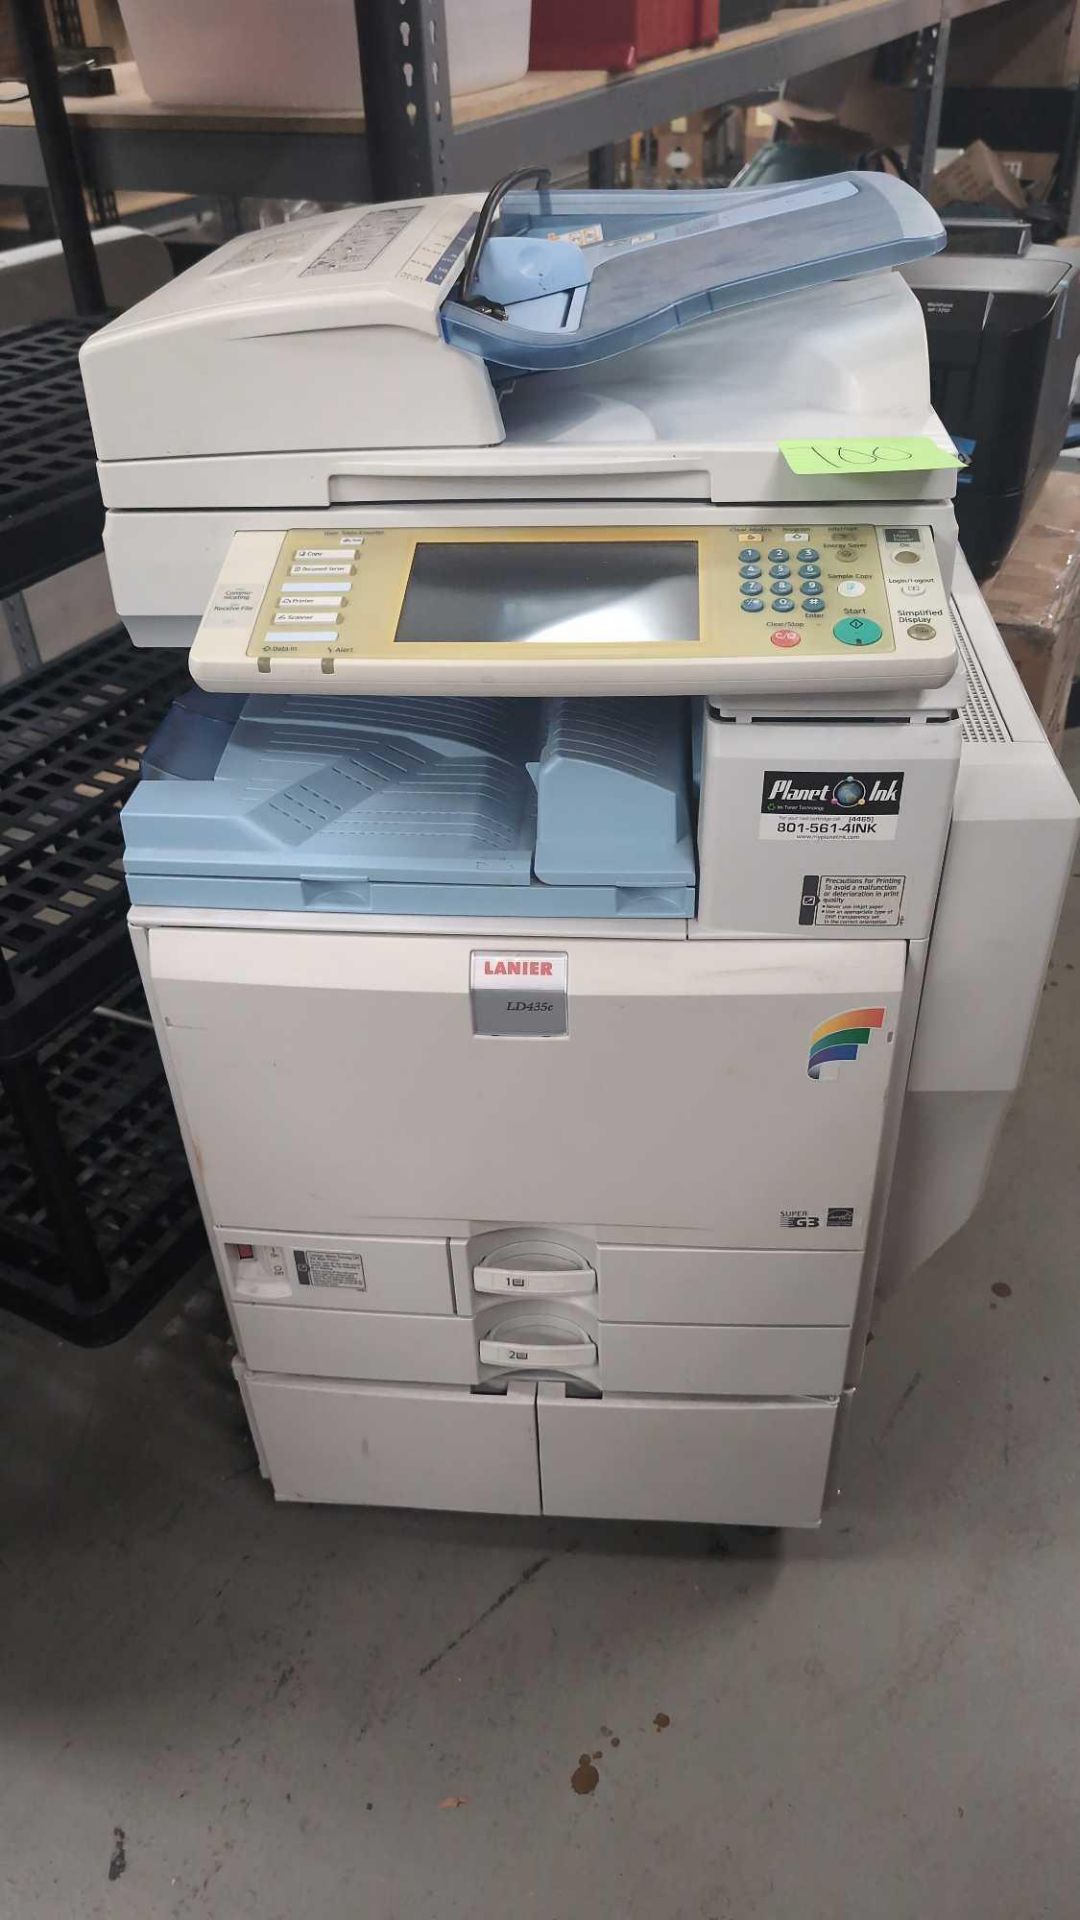 Lanier LD435c used printer